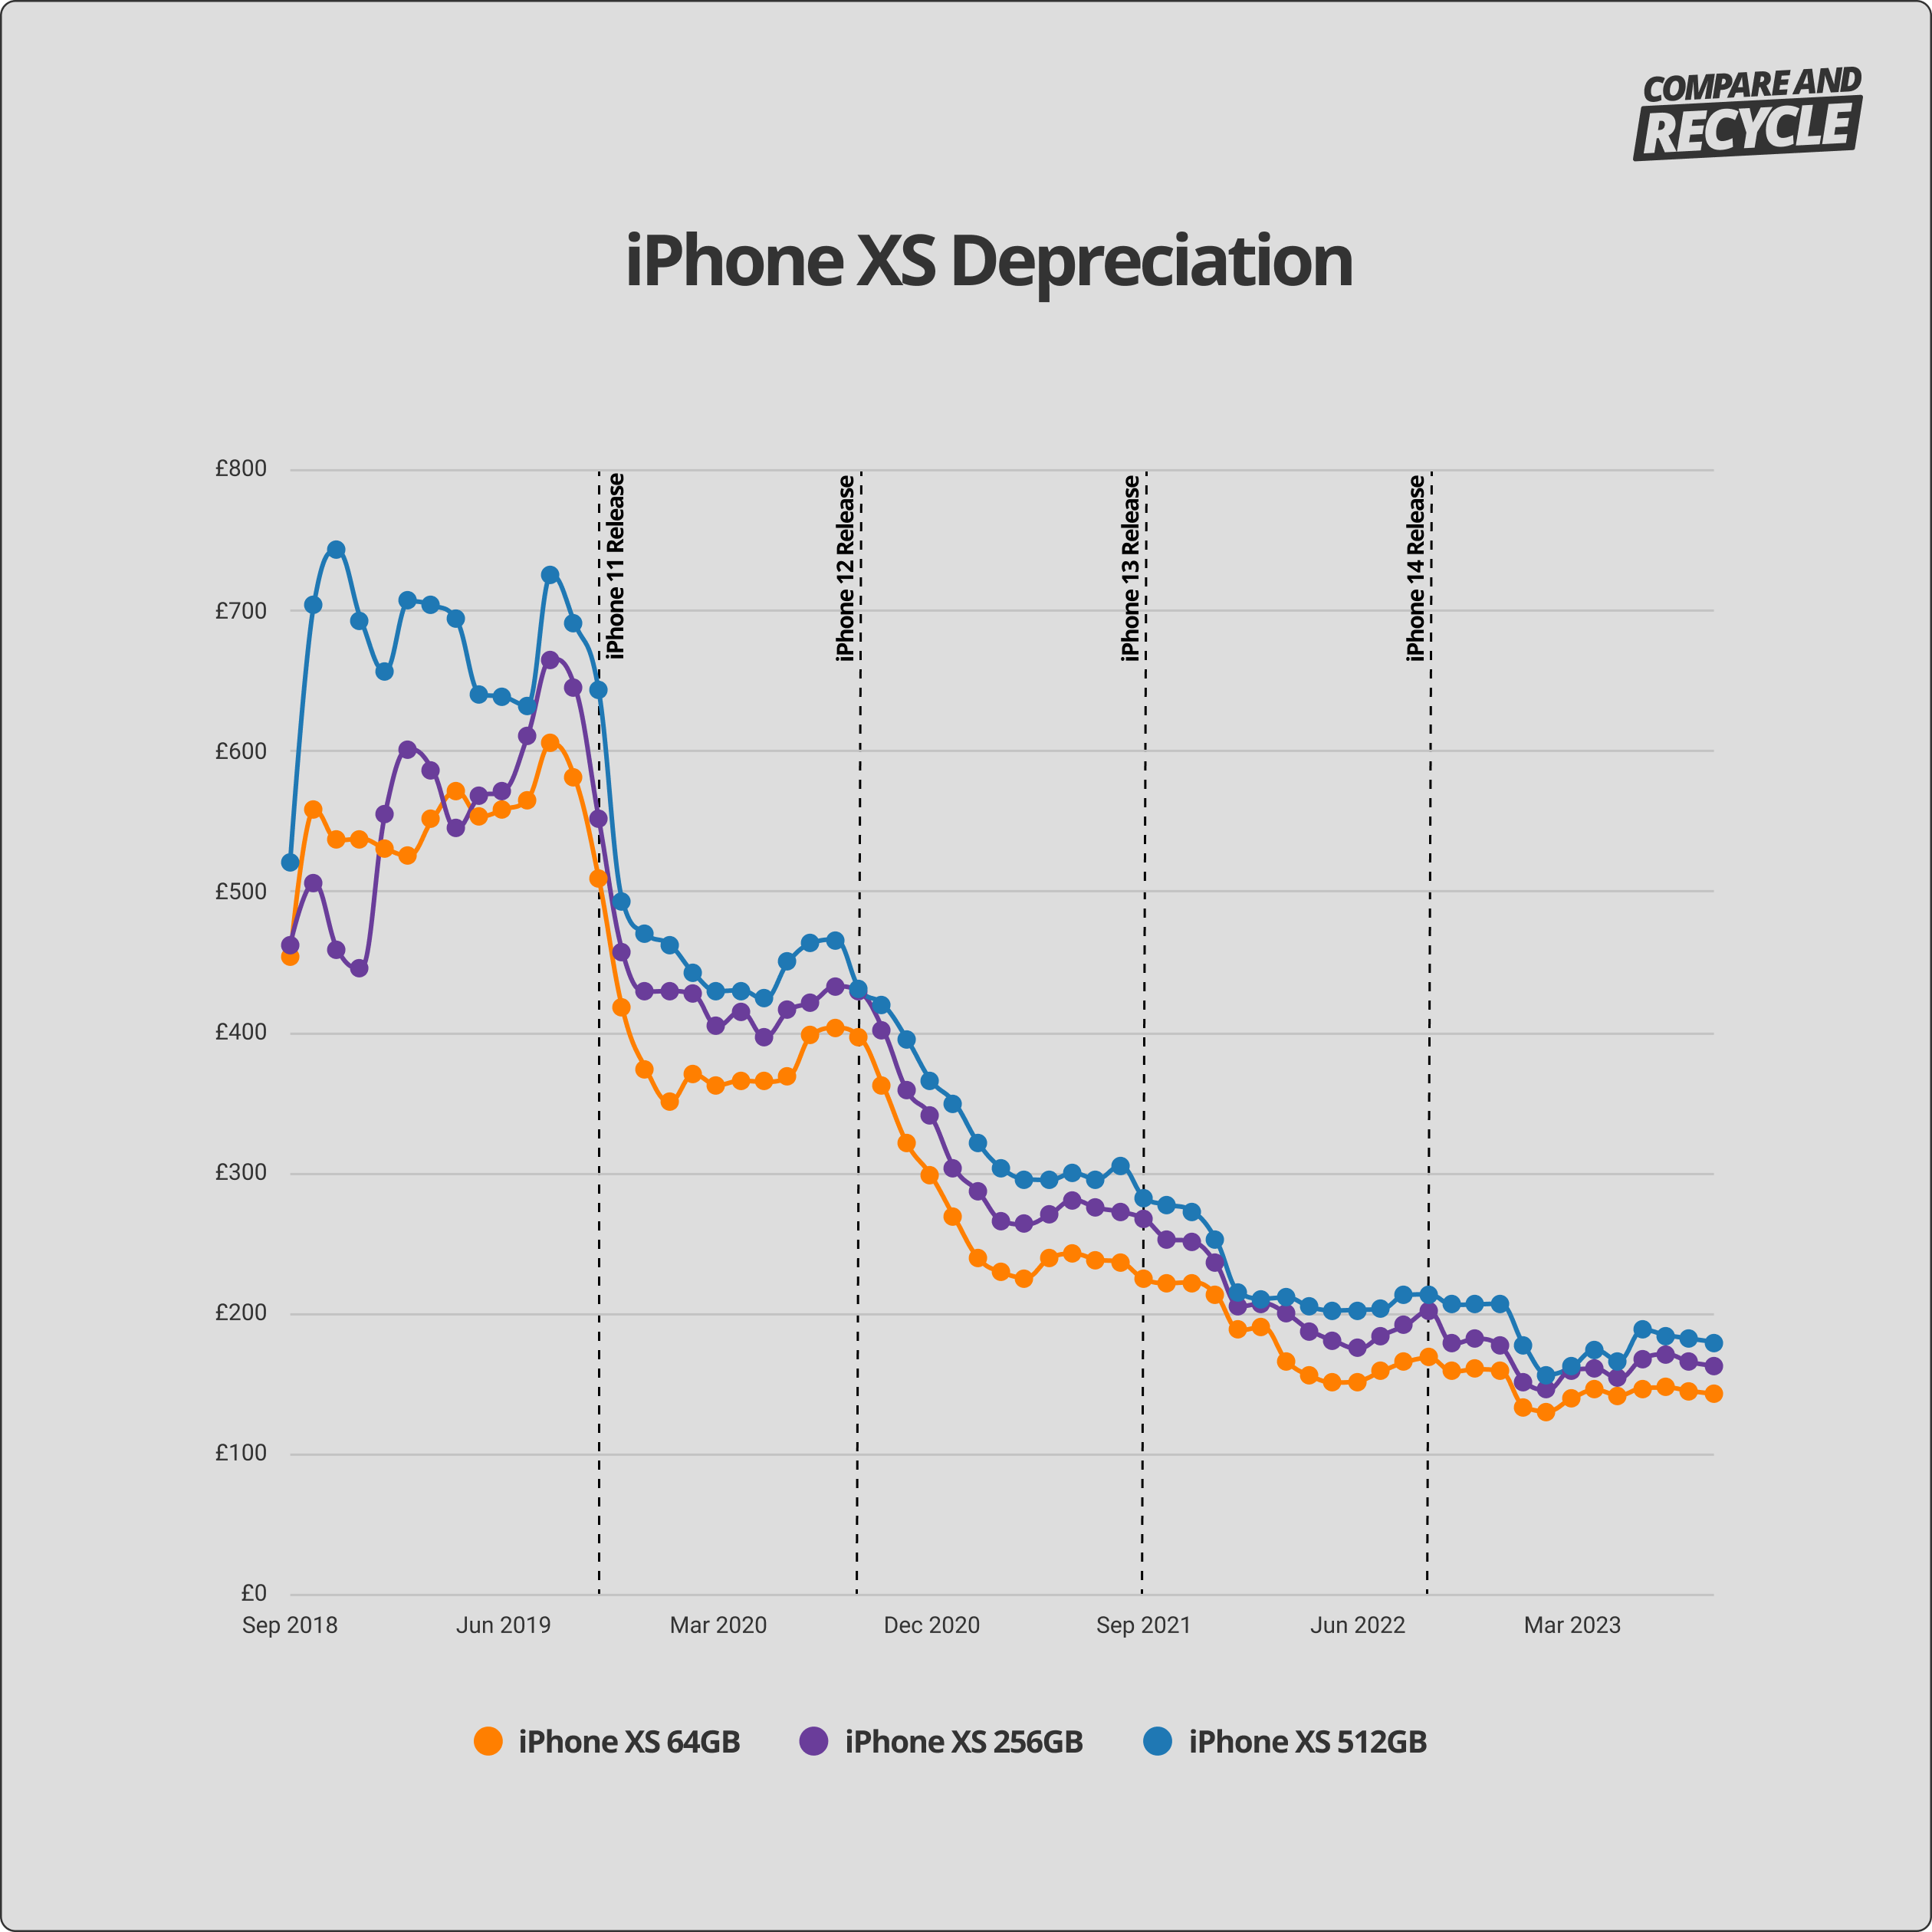 iPhone XS depreciation graph